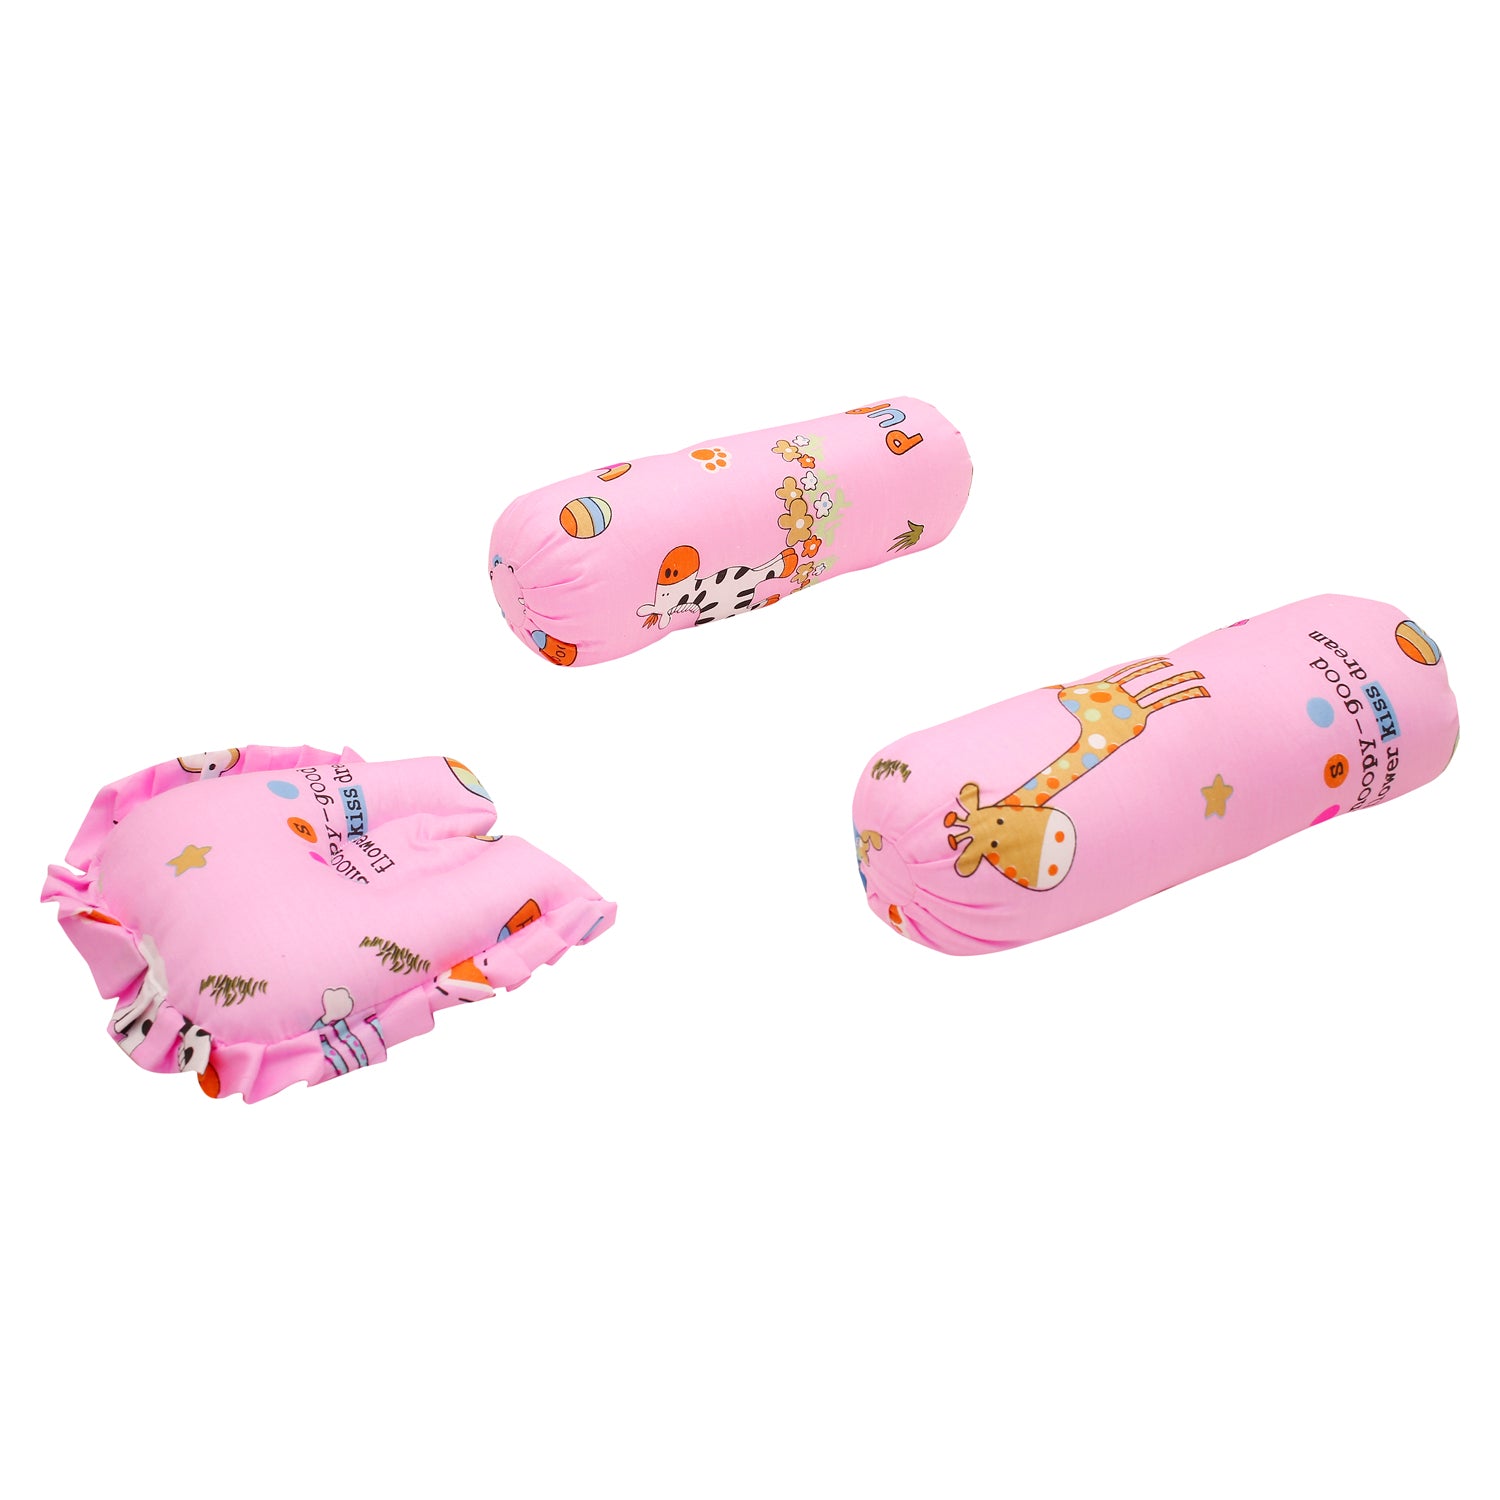 Premium Bedding Gift Set Savanna Ooh Na Na Pink - Baby Moo